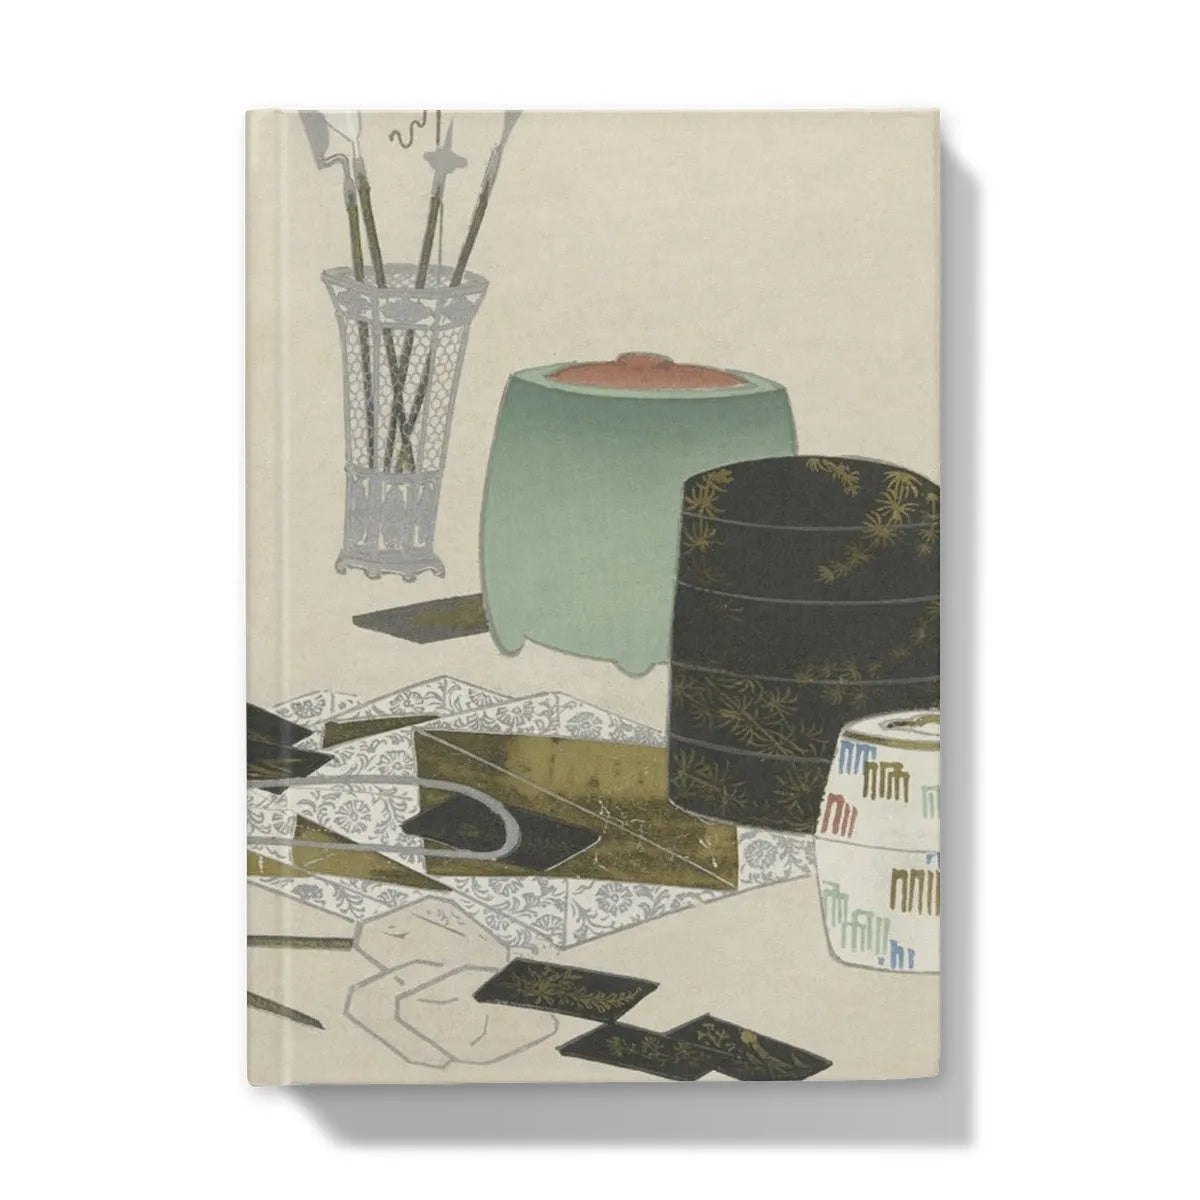 Art Supplies By Kamisaka Sekka Hardback Journal - Notebooks & Notepads - Aesthetic Art